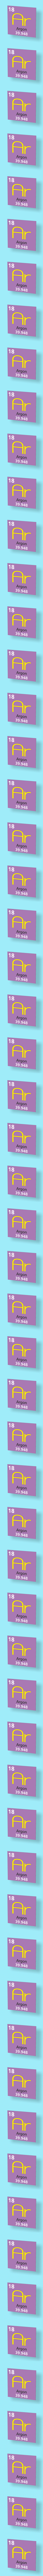 Argon element #18/118